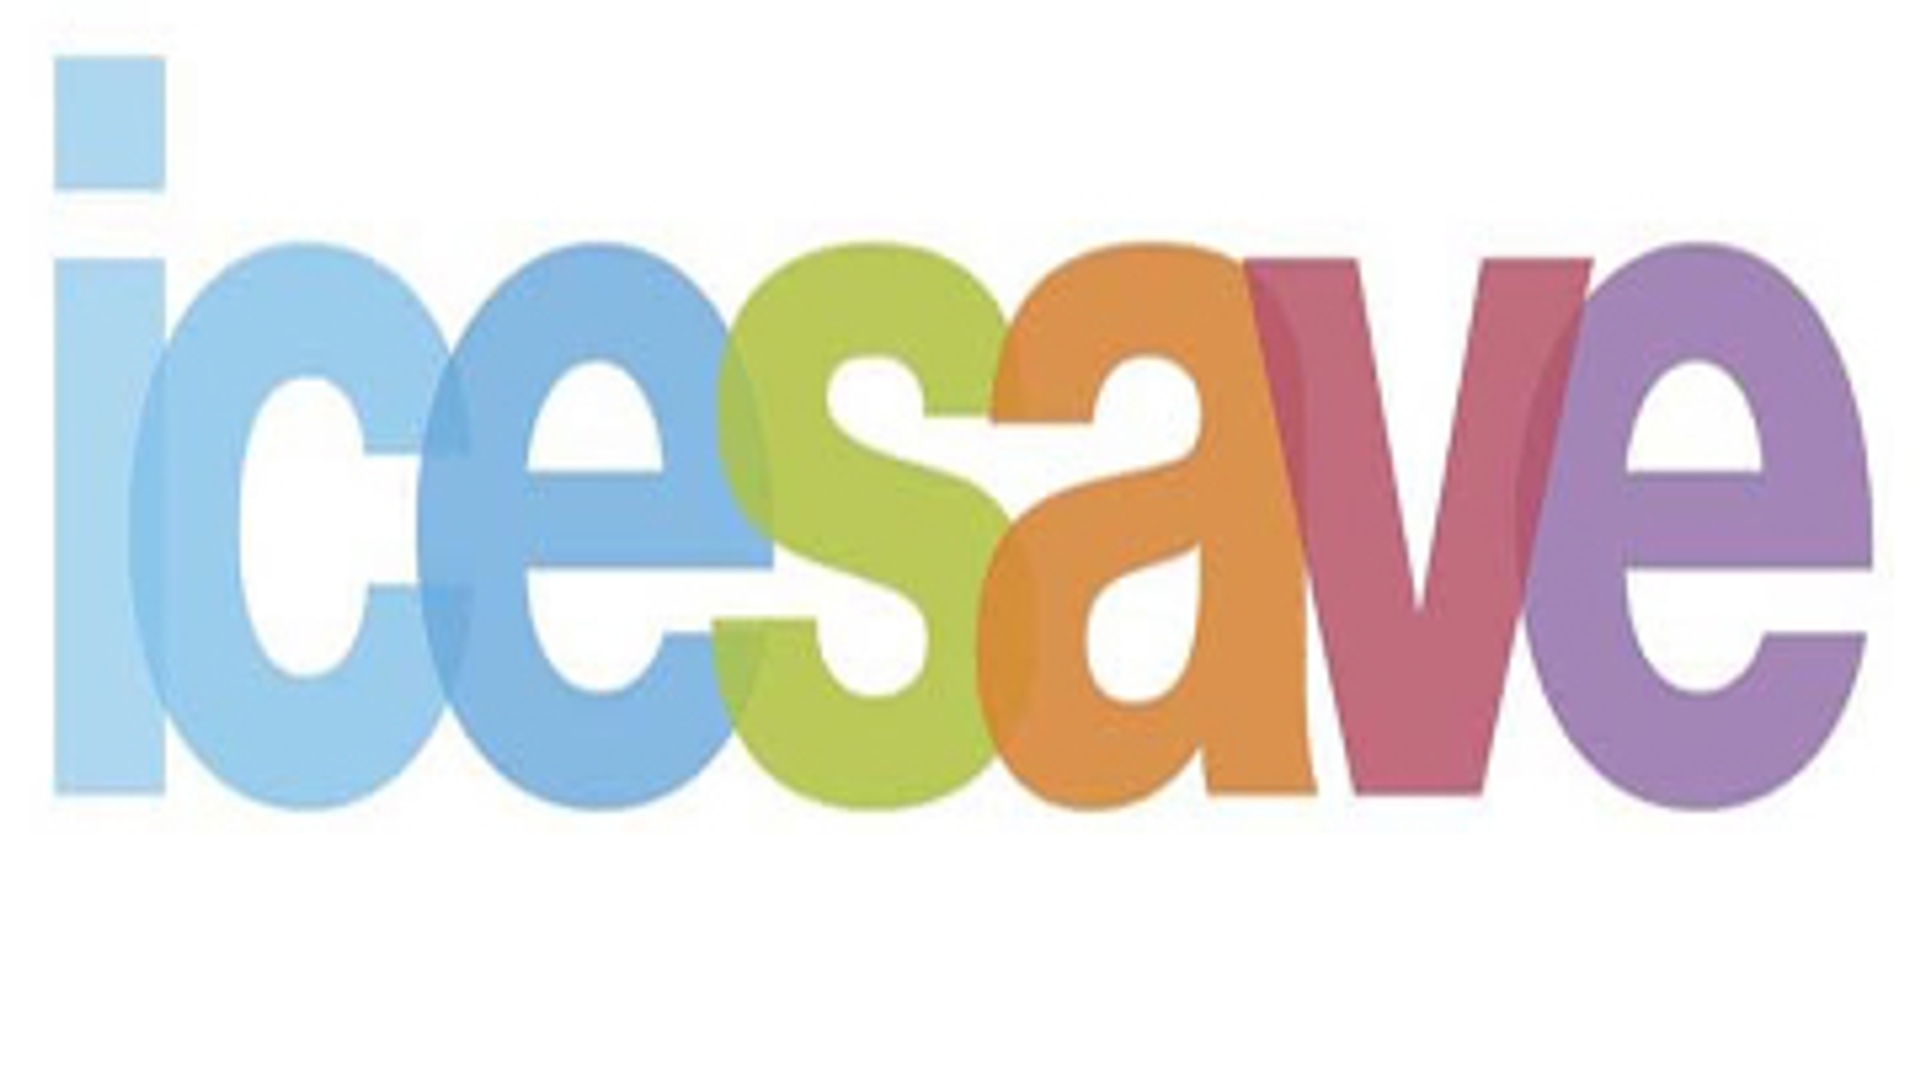 icesave-logo-groot_01.jpg